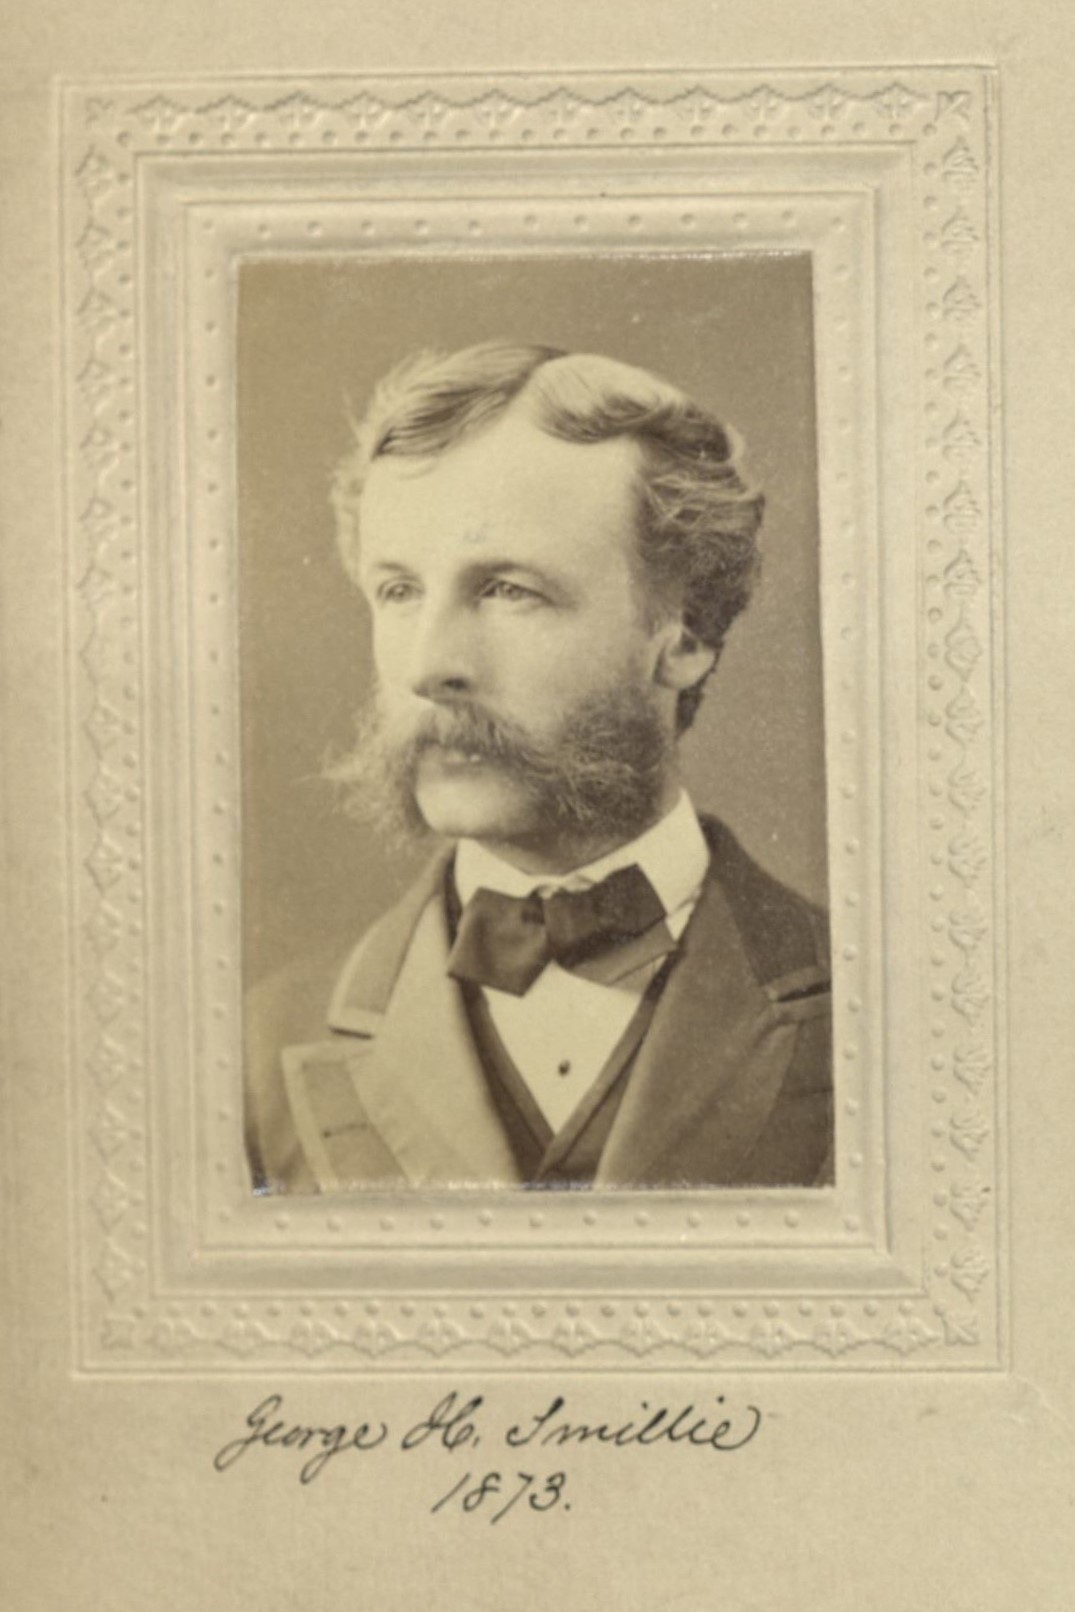 Member portrait of George H. Smillie